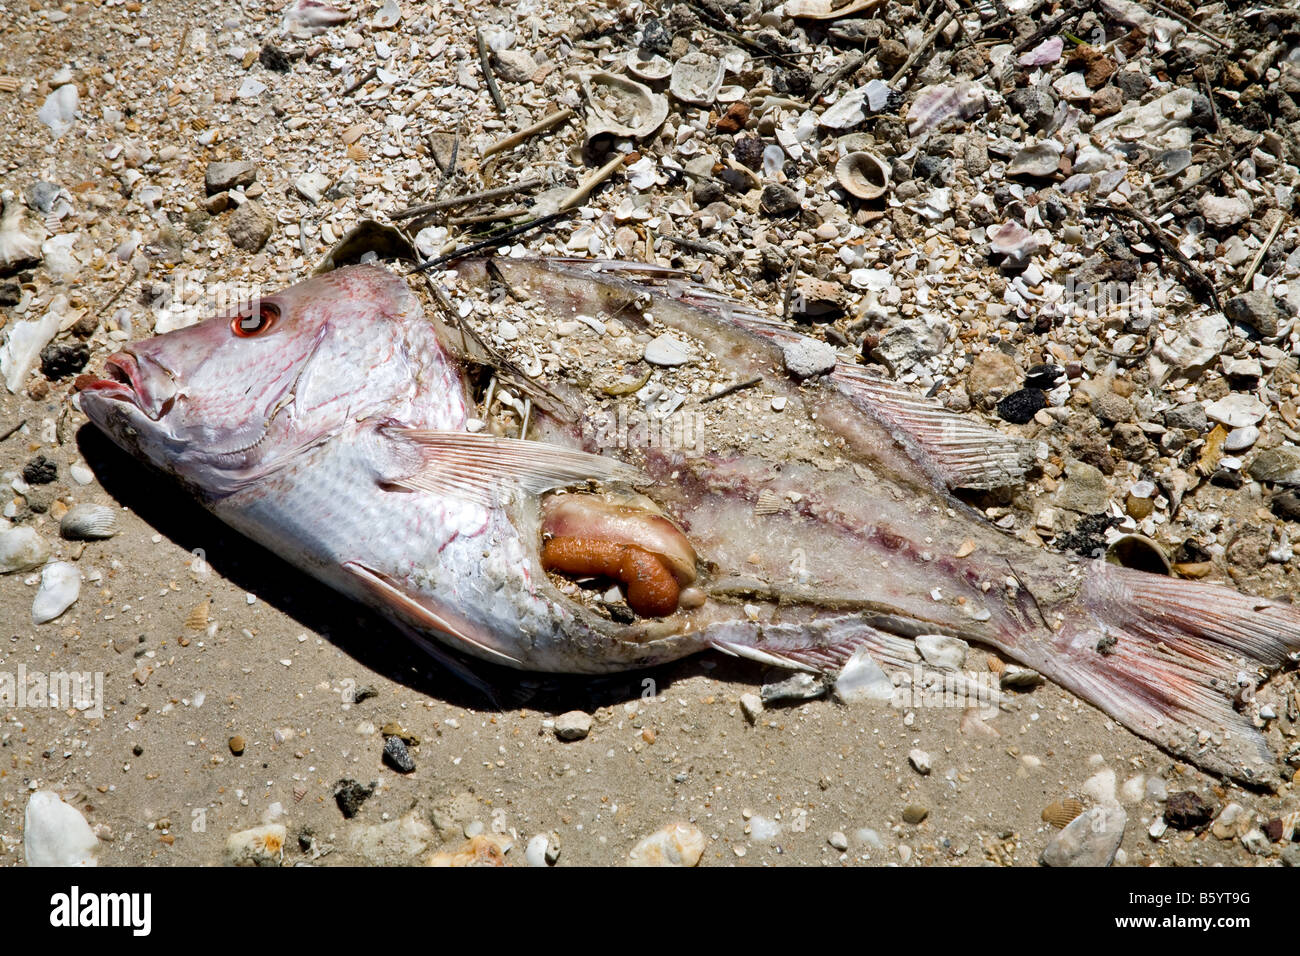 Dead fish on a brown sand beach on a beach in Florida Stock Photo